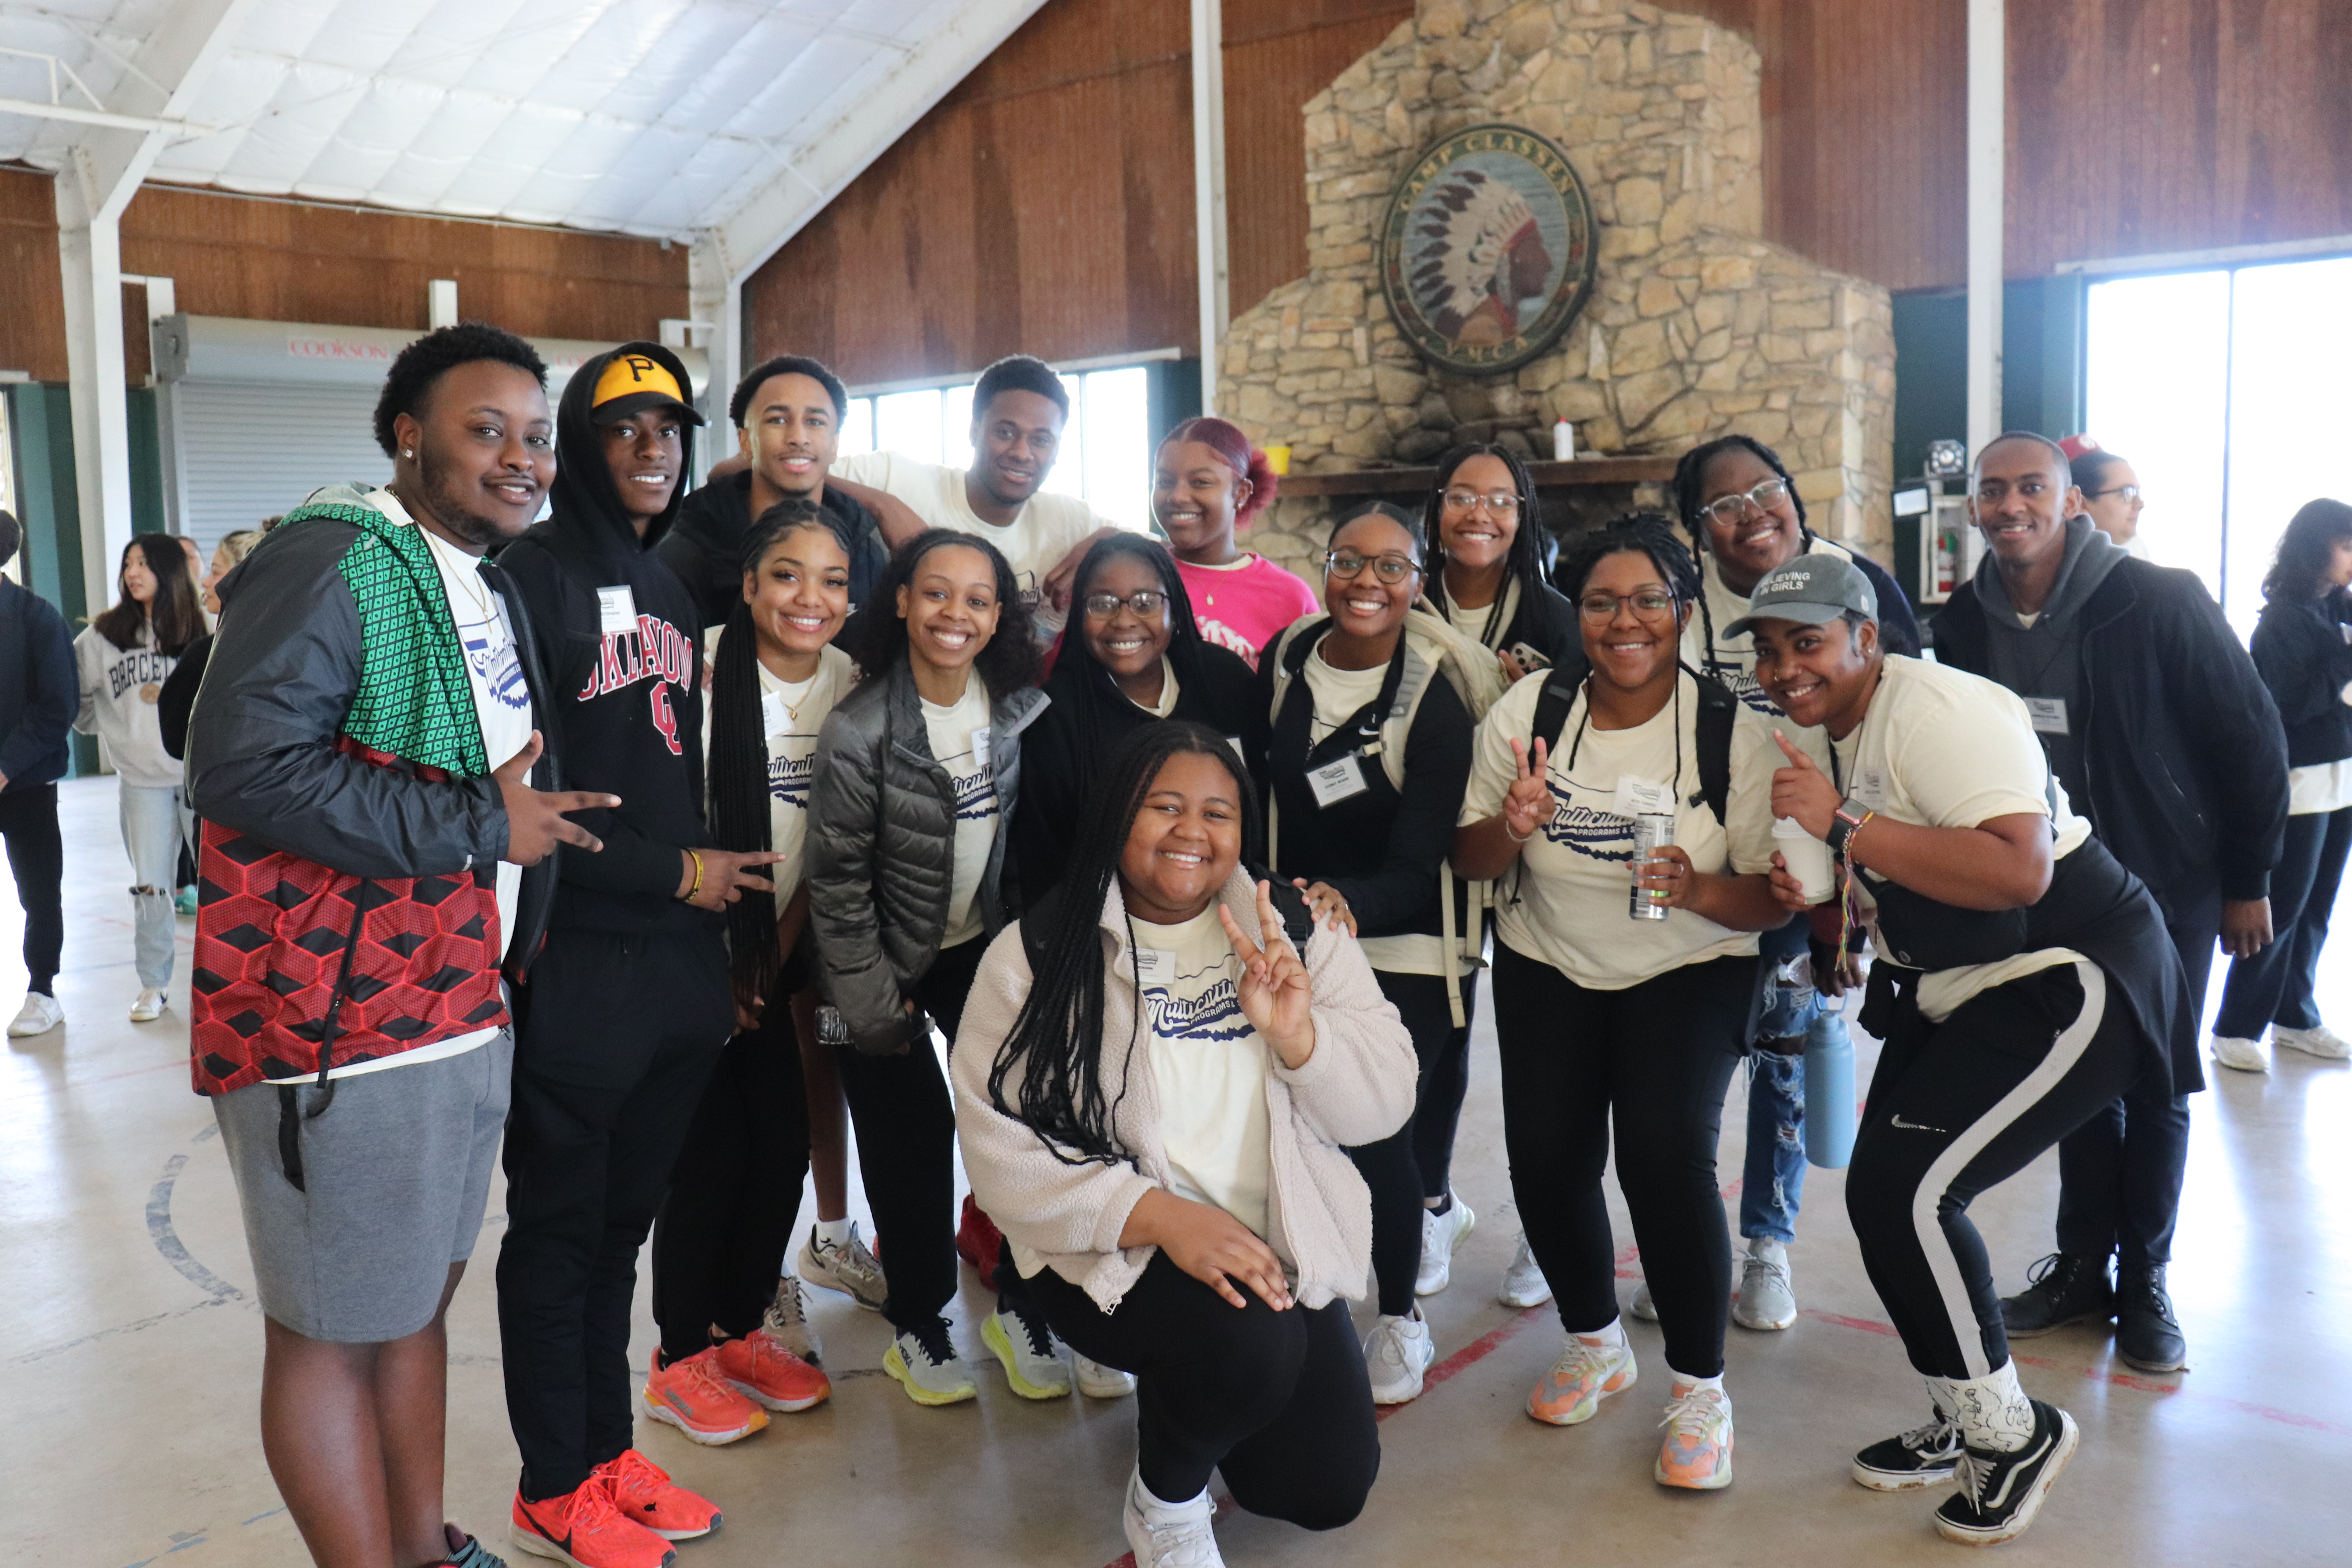 The Black Student Association executive team at a retreat.